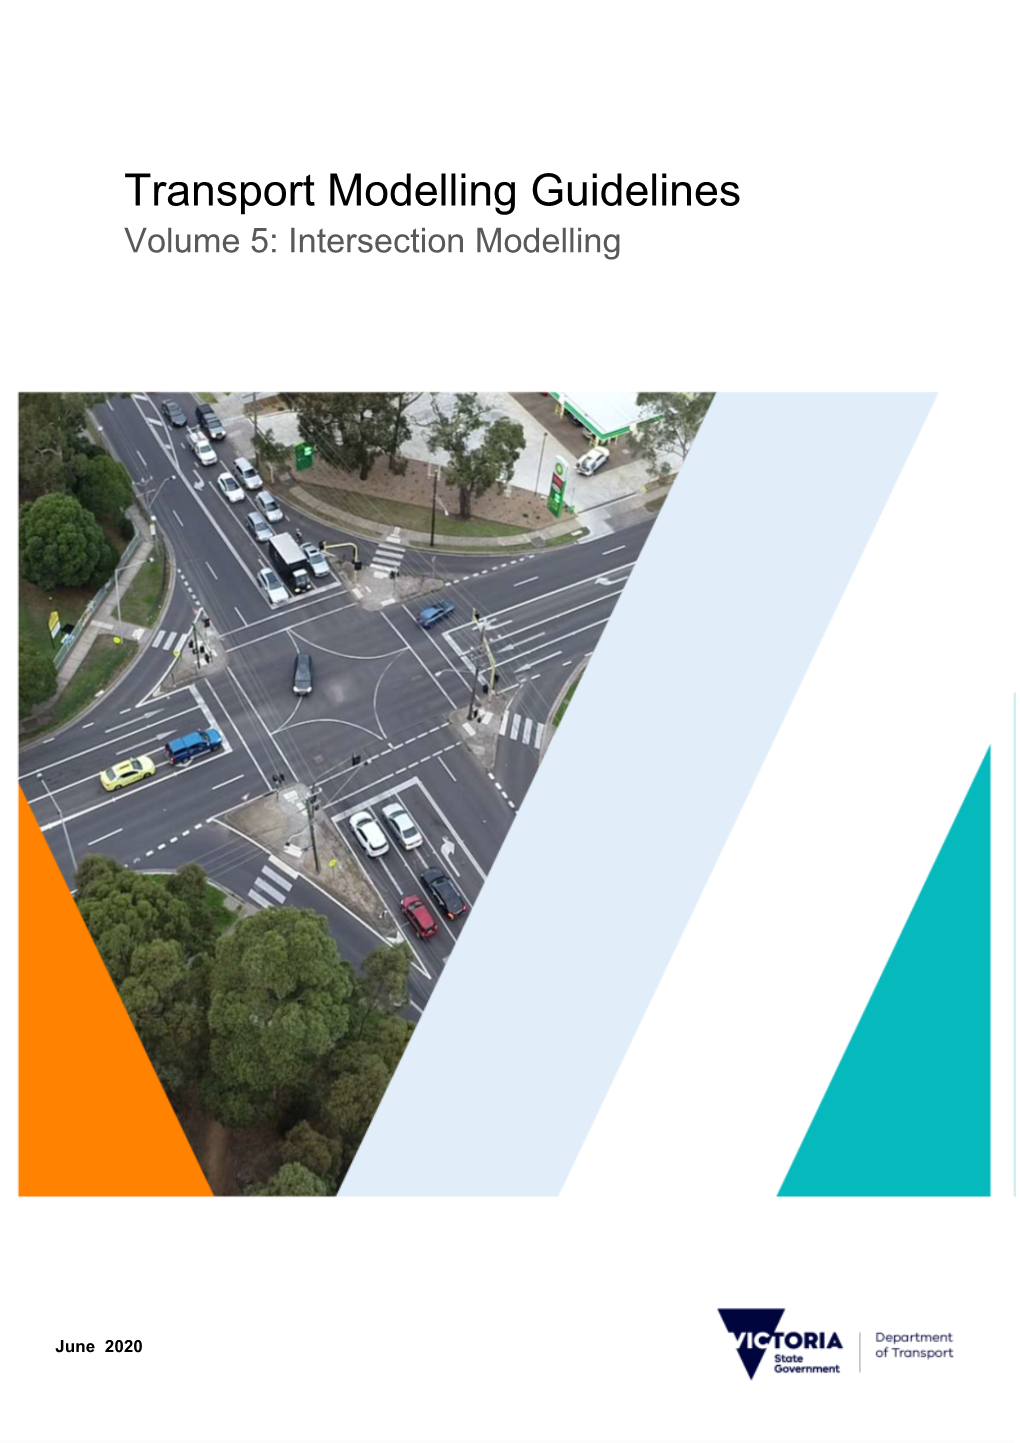 Transport Modelling Guidelines Volume 5: Intersection Modelling